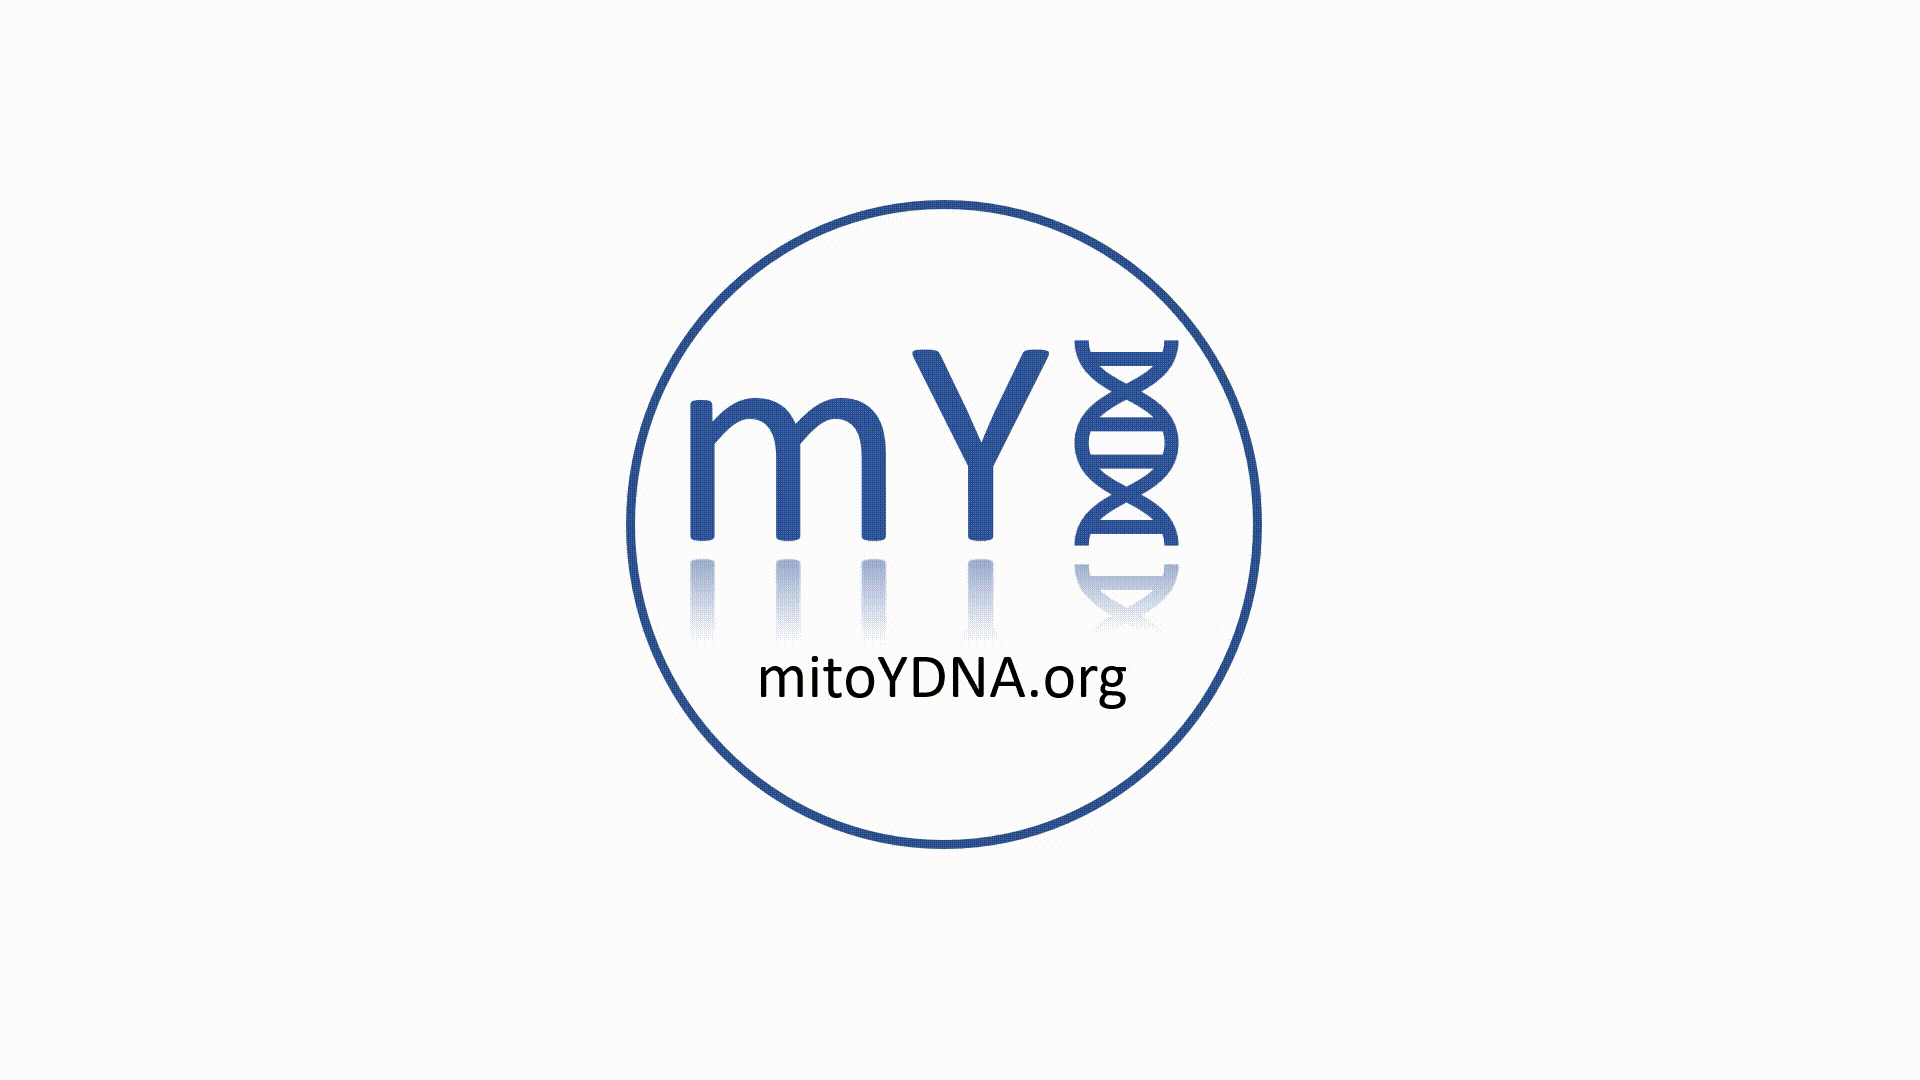 mitoYDNA.org!